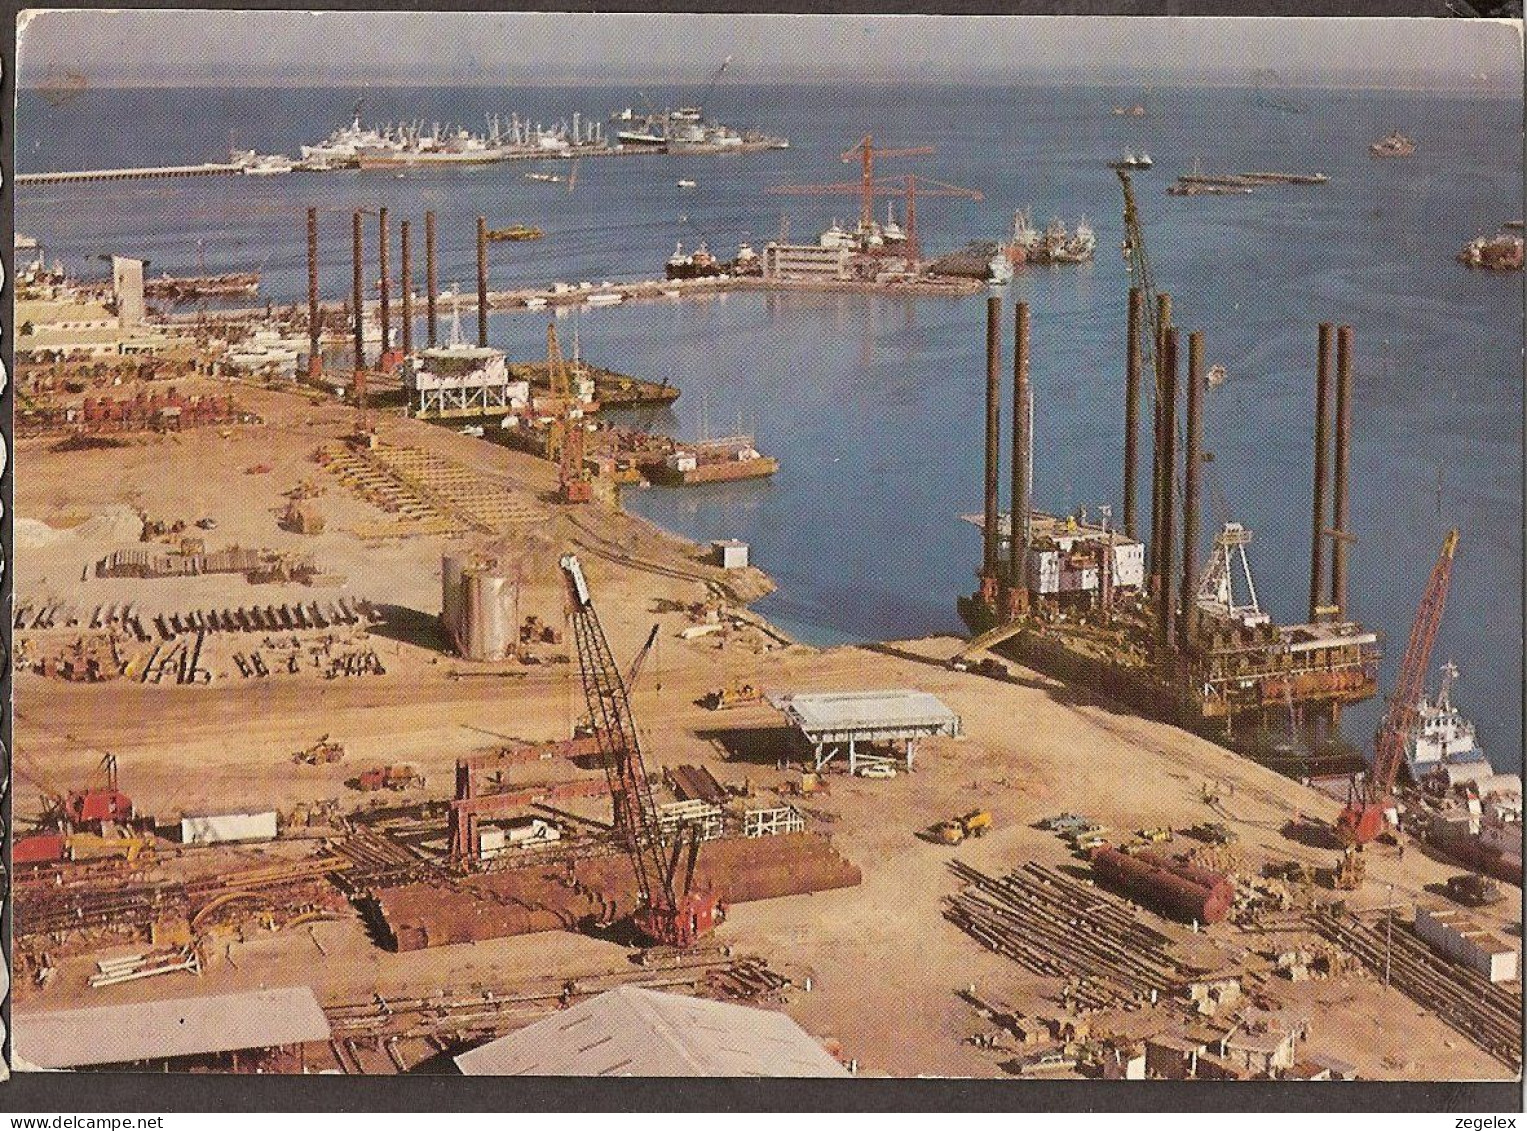 Bahrain - Industrial Area 1981 - Oil Rigs, Harbour, Cranes, Port - Baharain